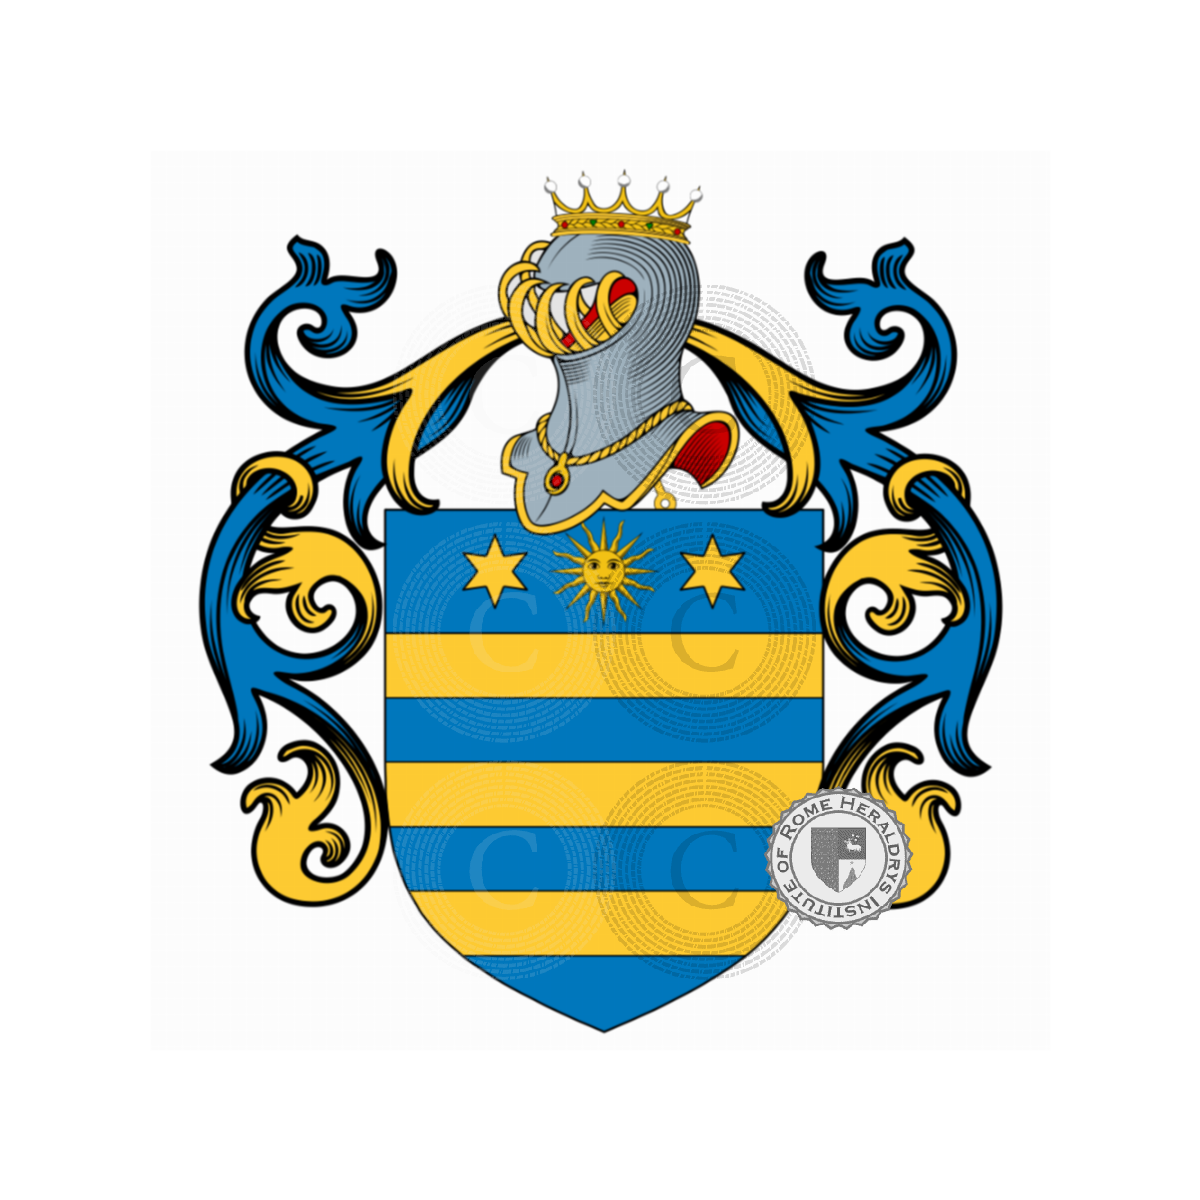 Coat of arms of familyDonini